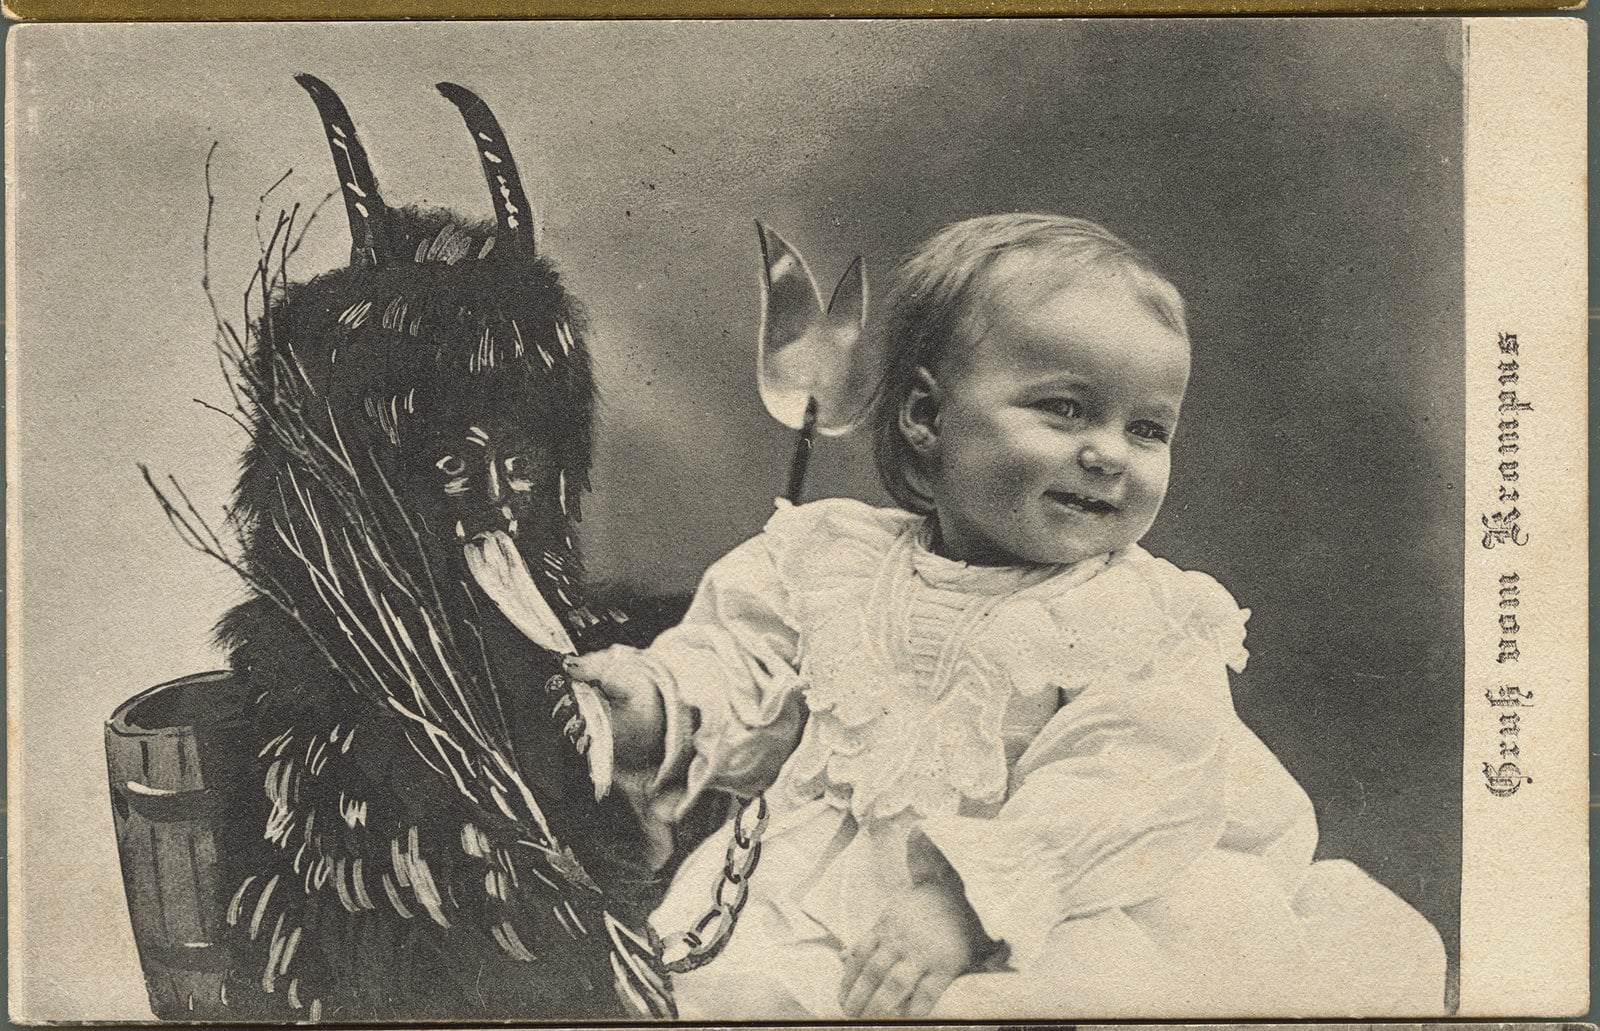 This portrait of child getting cozy with Krampus, circa 1900